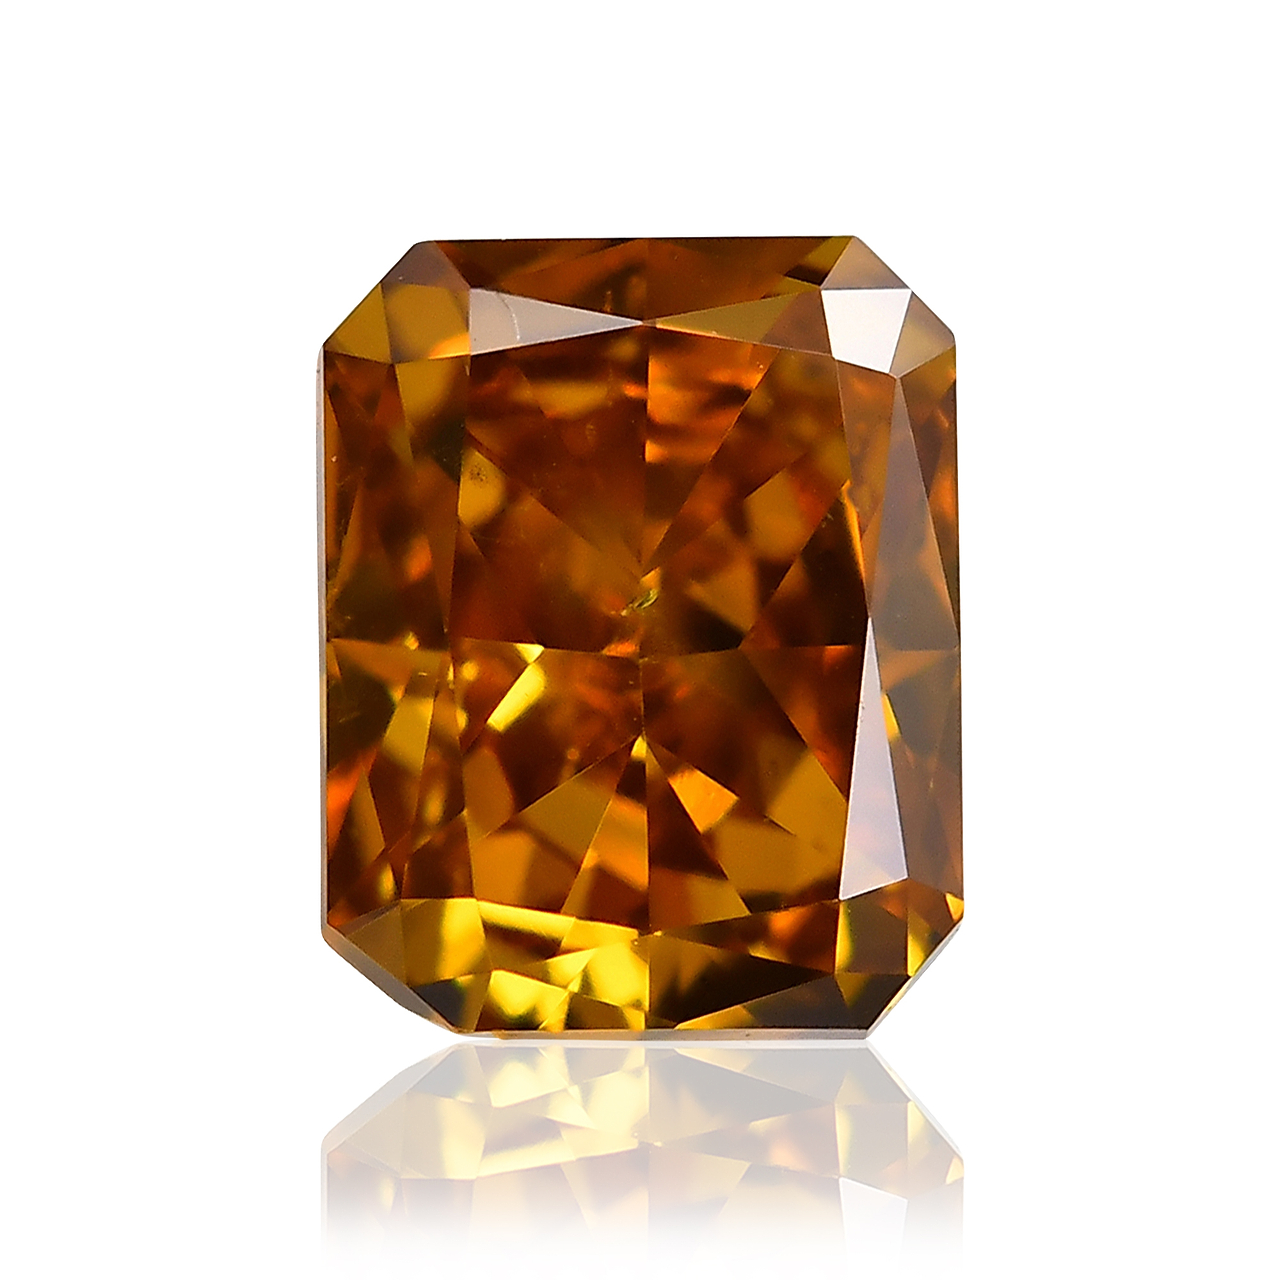 0.47 carat, Fancy Deep Brownish Yellowish Orange Diamond, Radiant Shape,  SI2 Clarity, GIA, SKU 405198